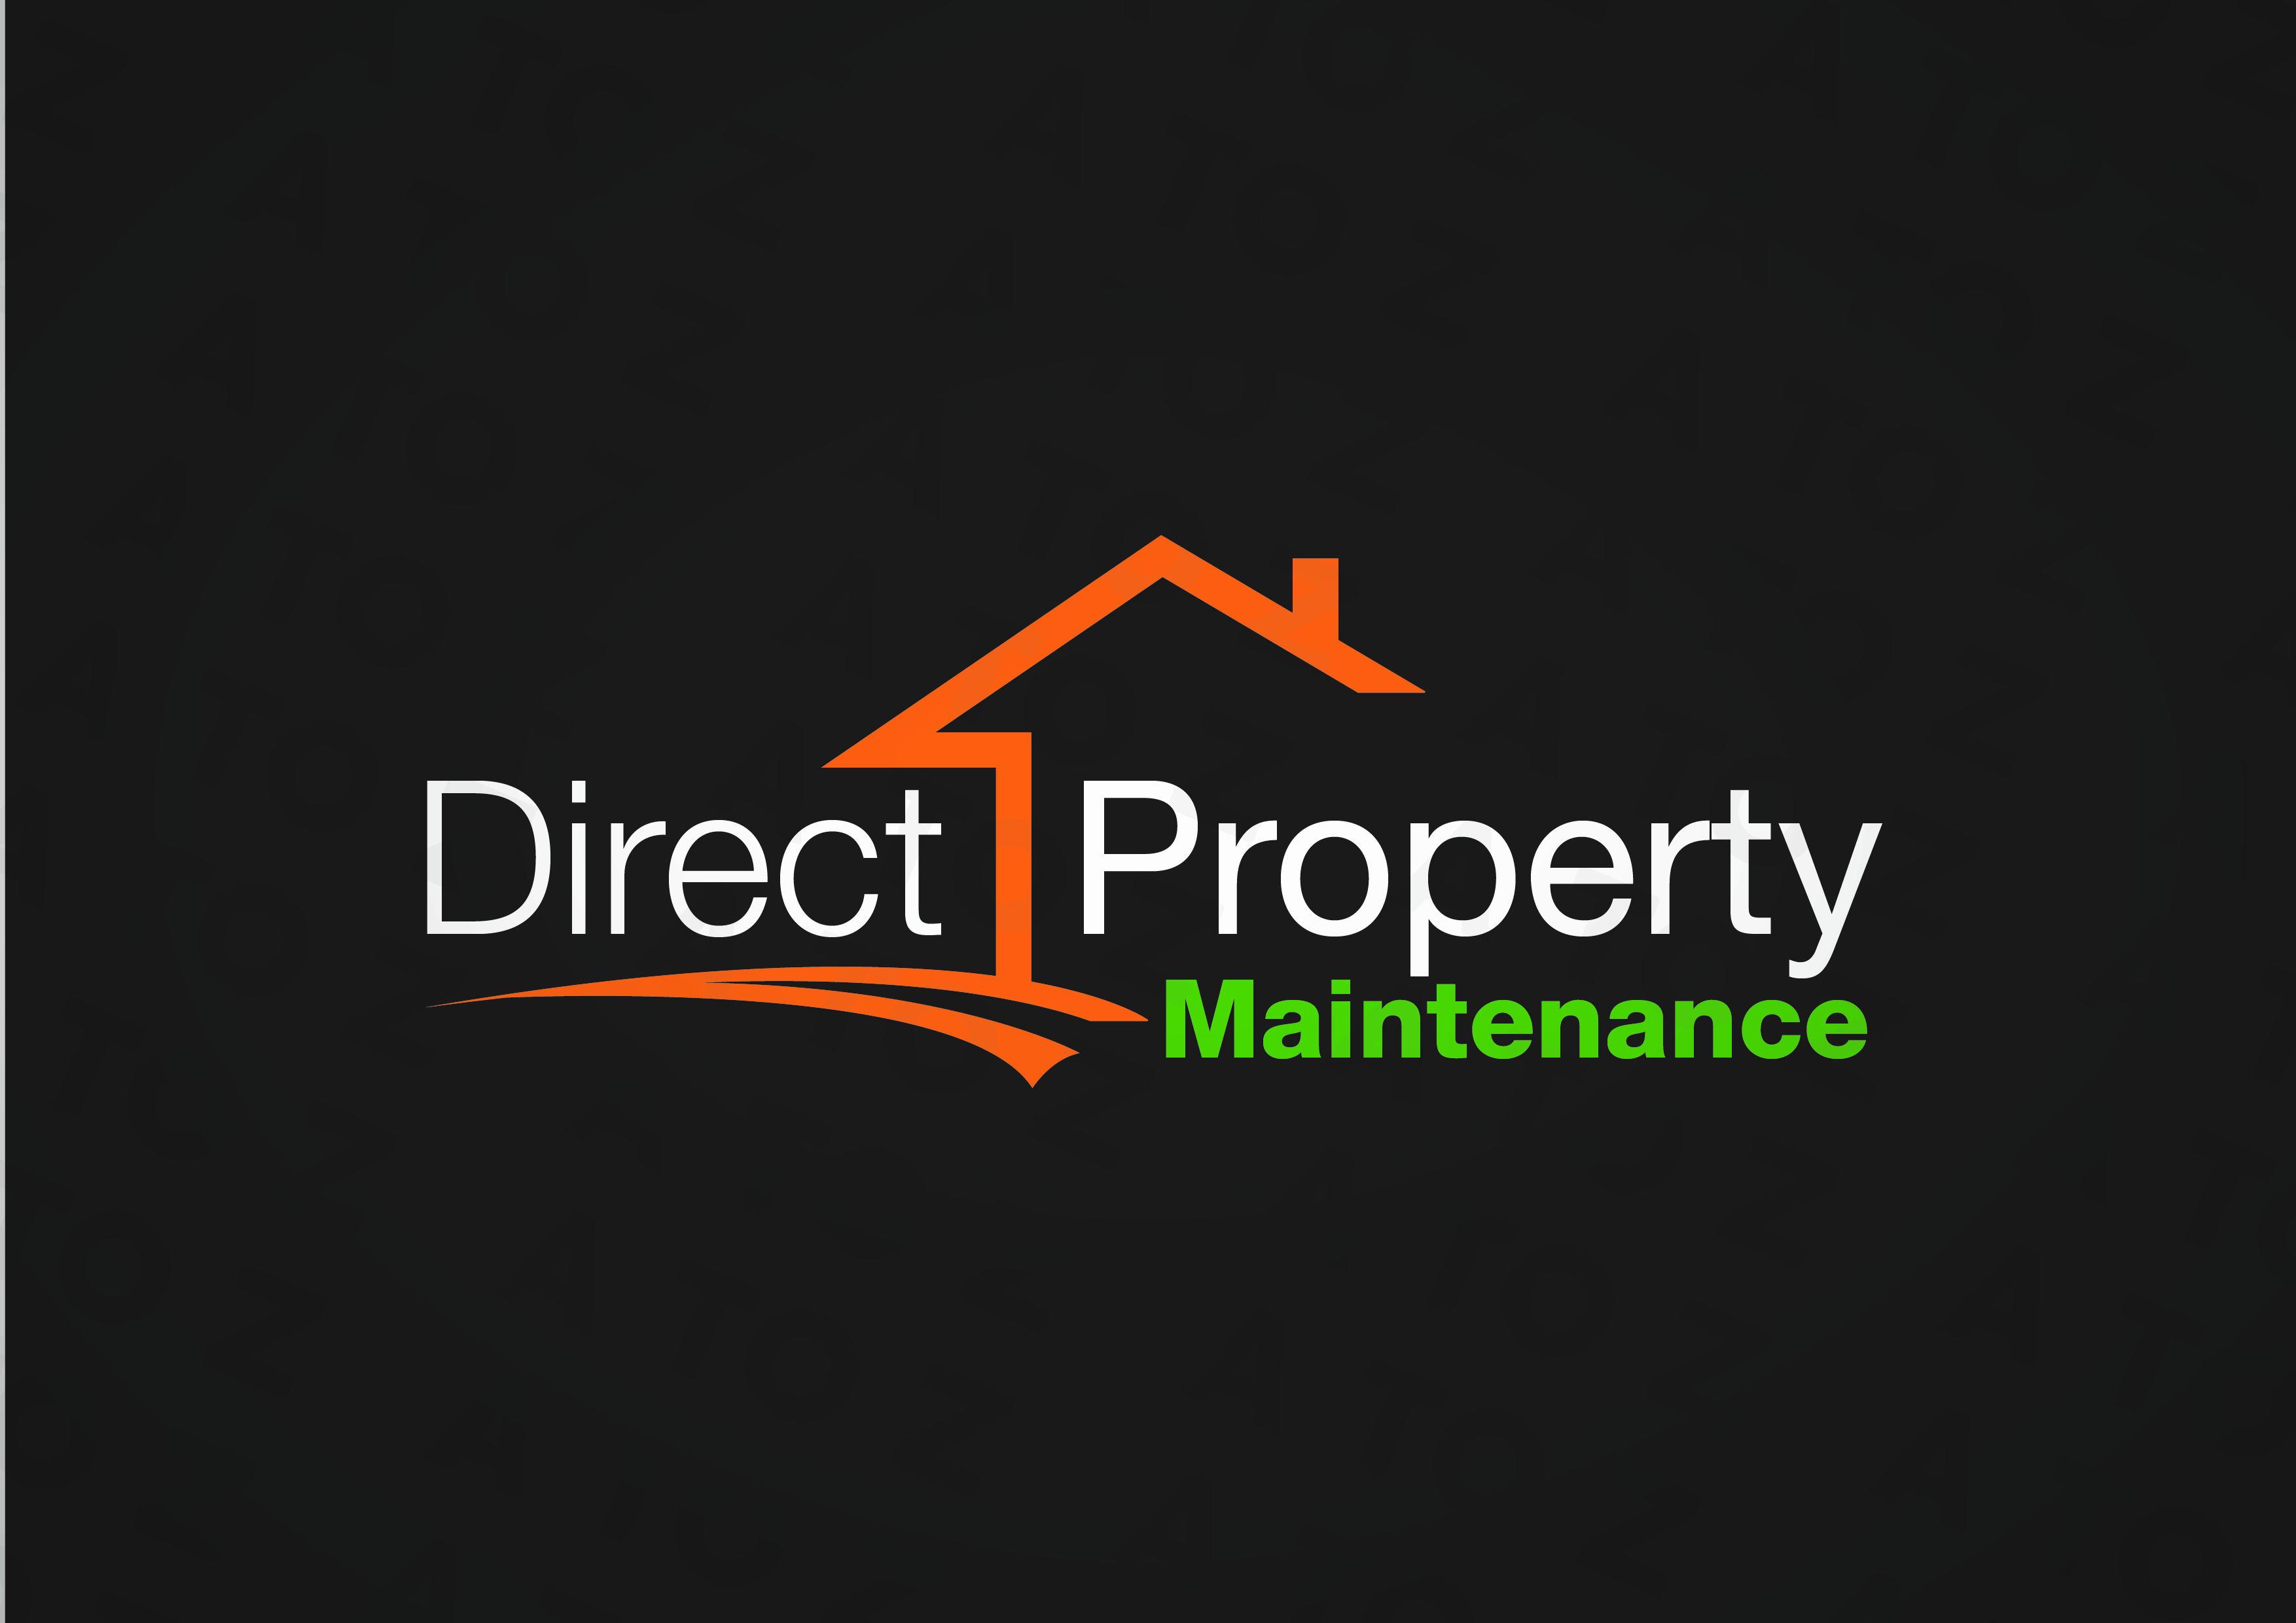 Direct Property Maintenance A to Z Promotions